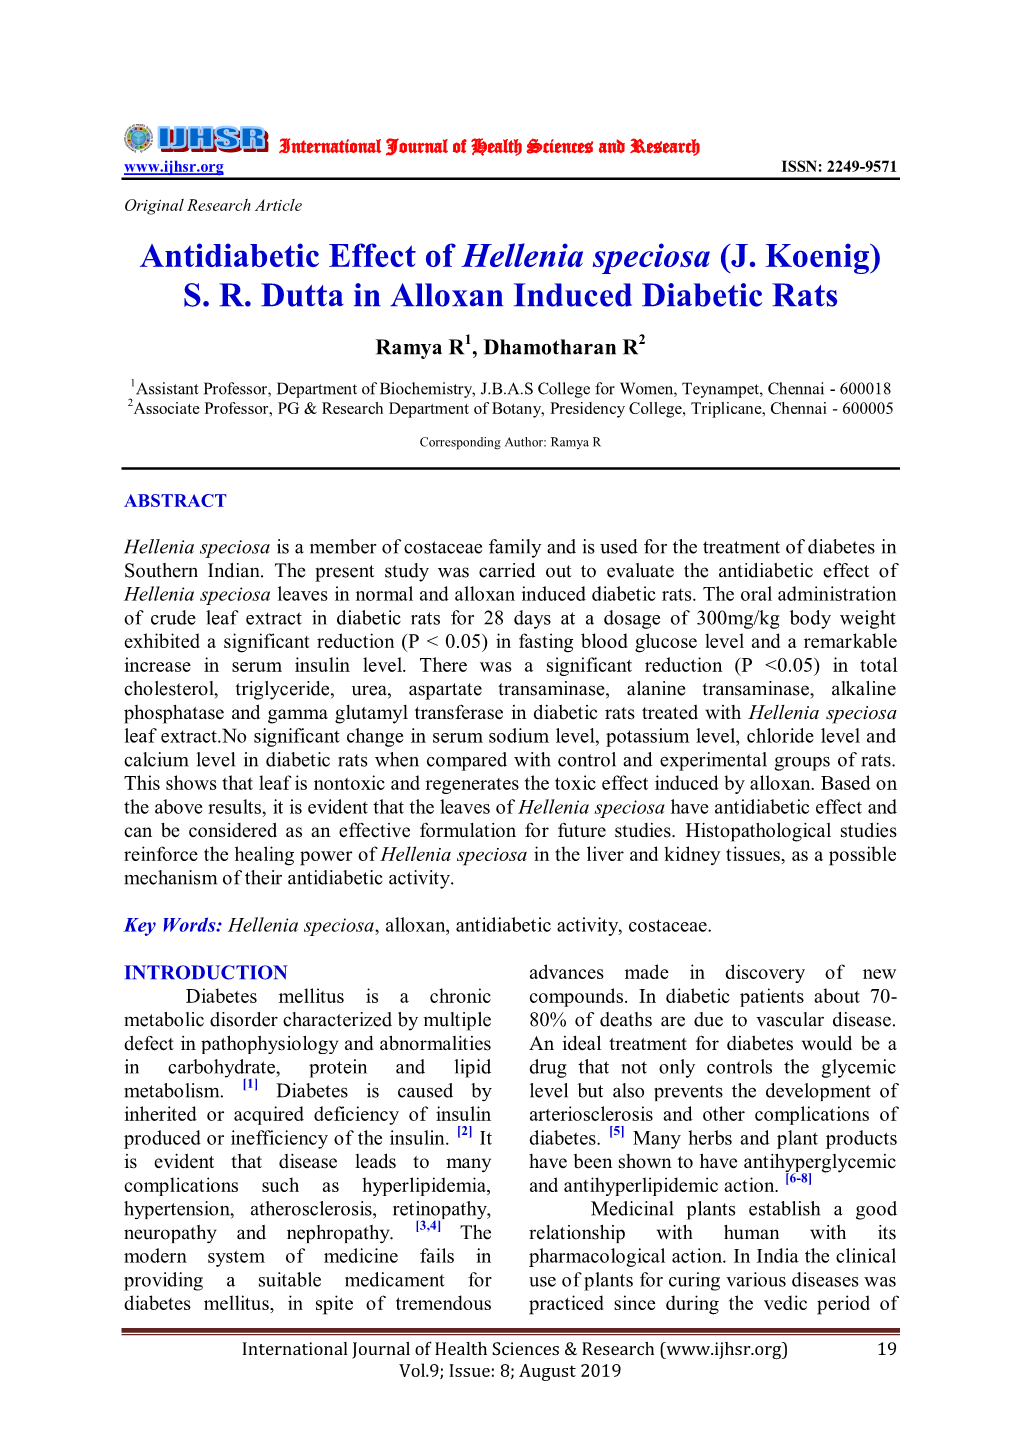 Antidiabetic Effect of Hellenia Speciosa (J